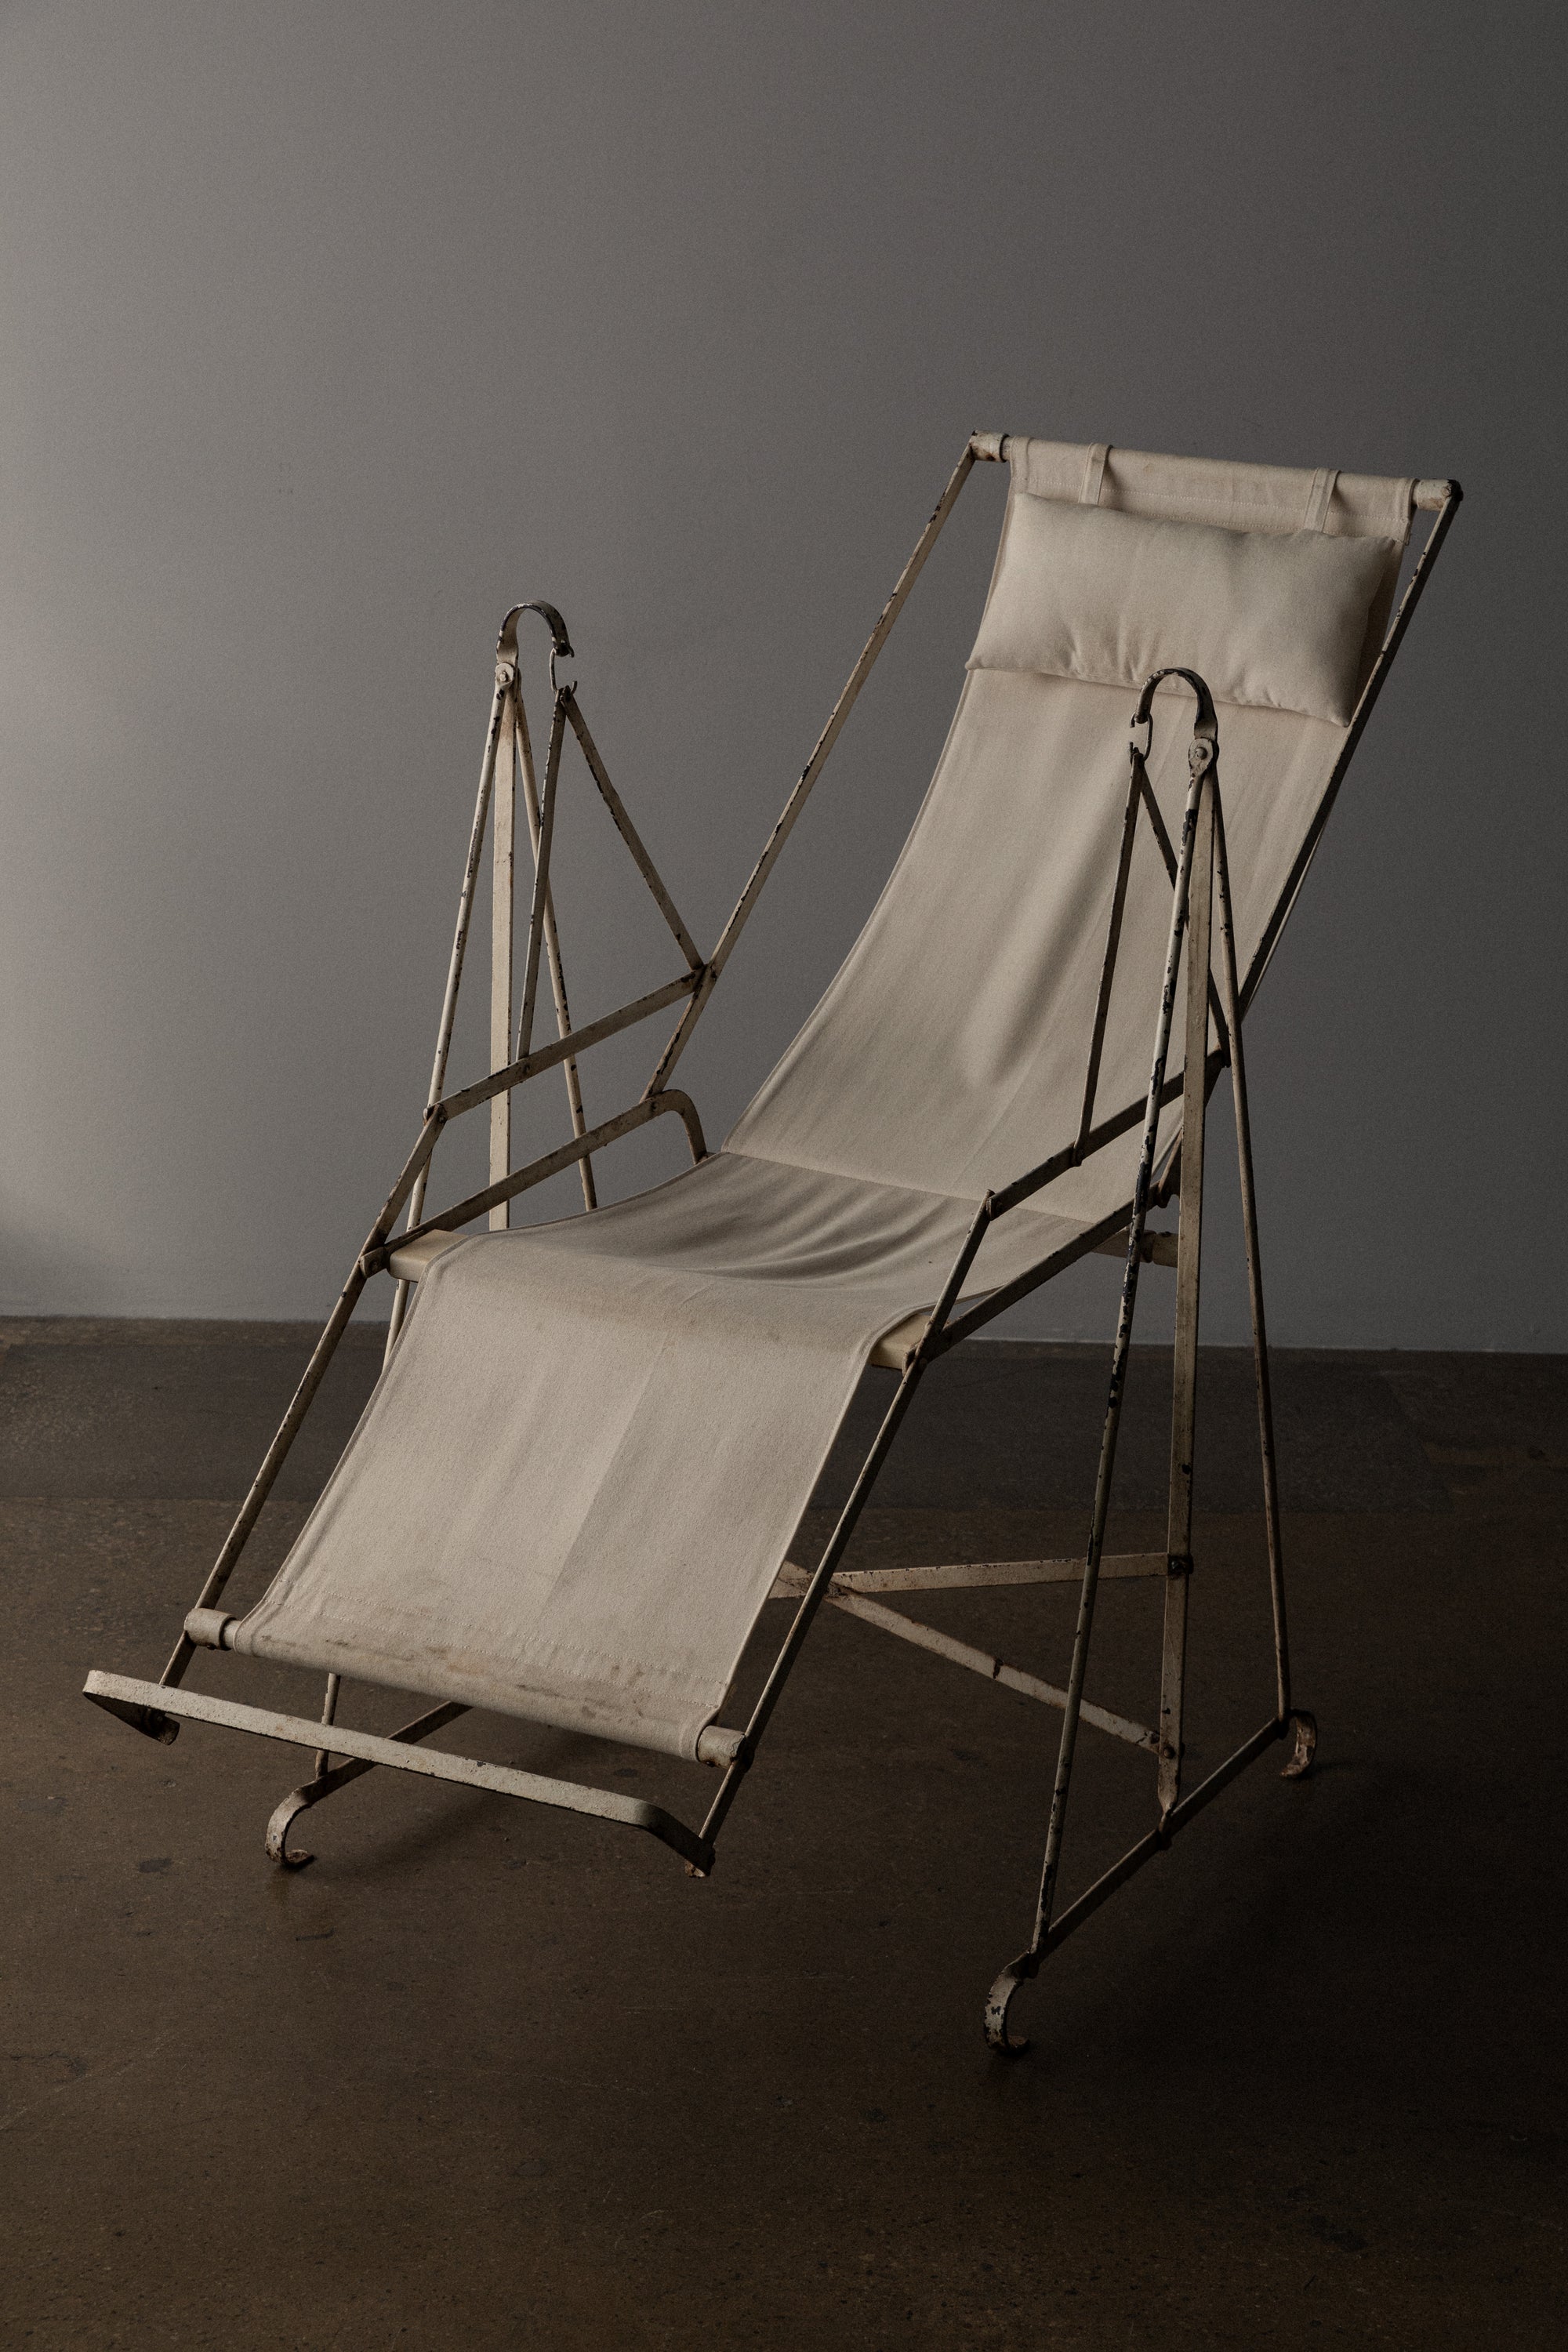 "2:30 Chair" by Ernest Trova